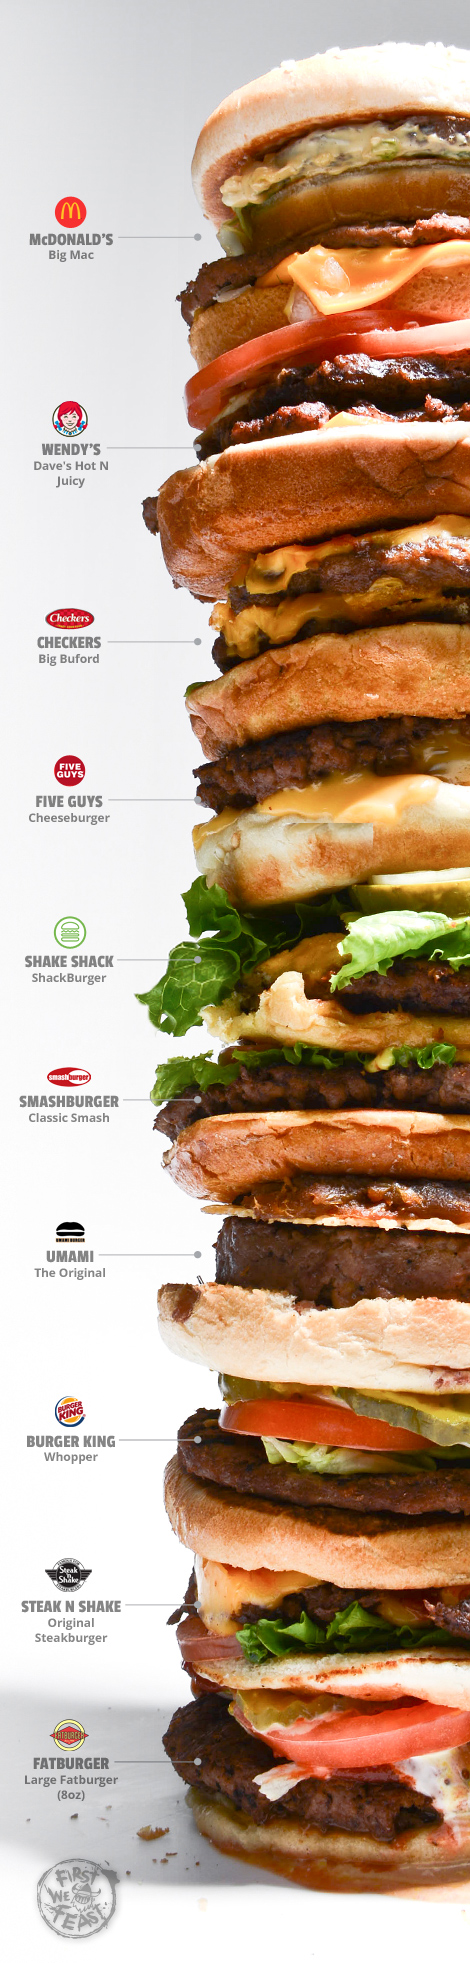 uber_burger_layers.jpg